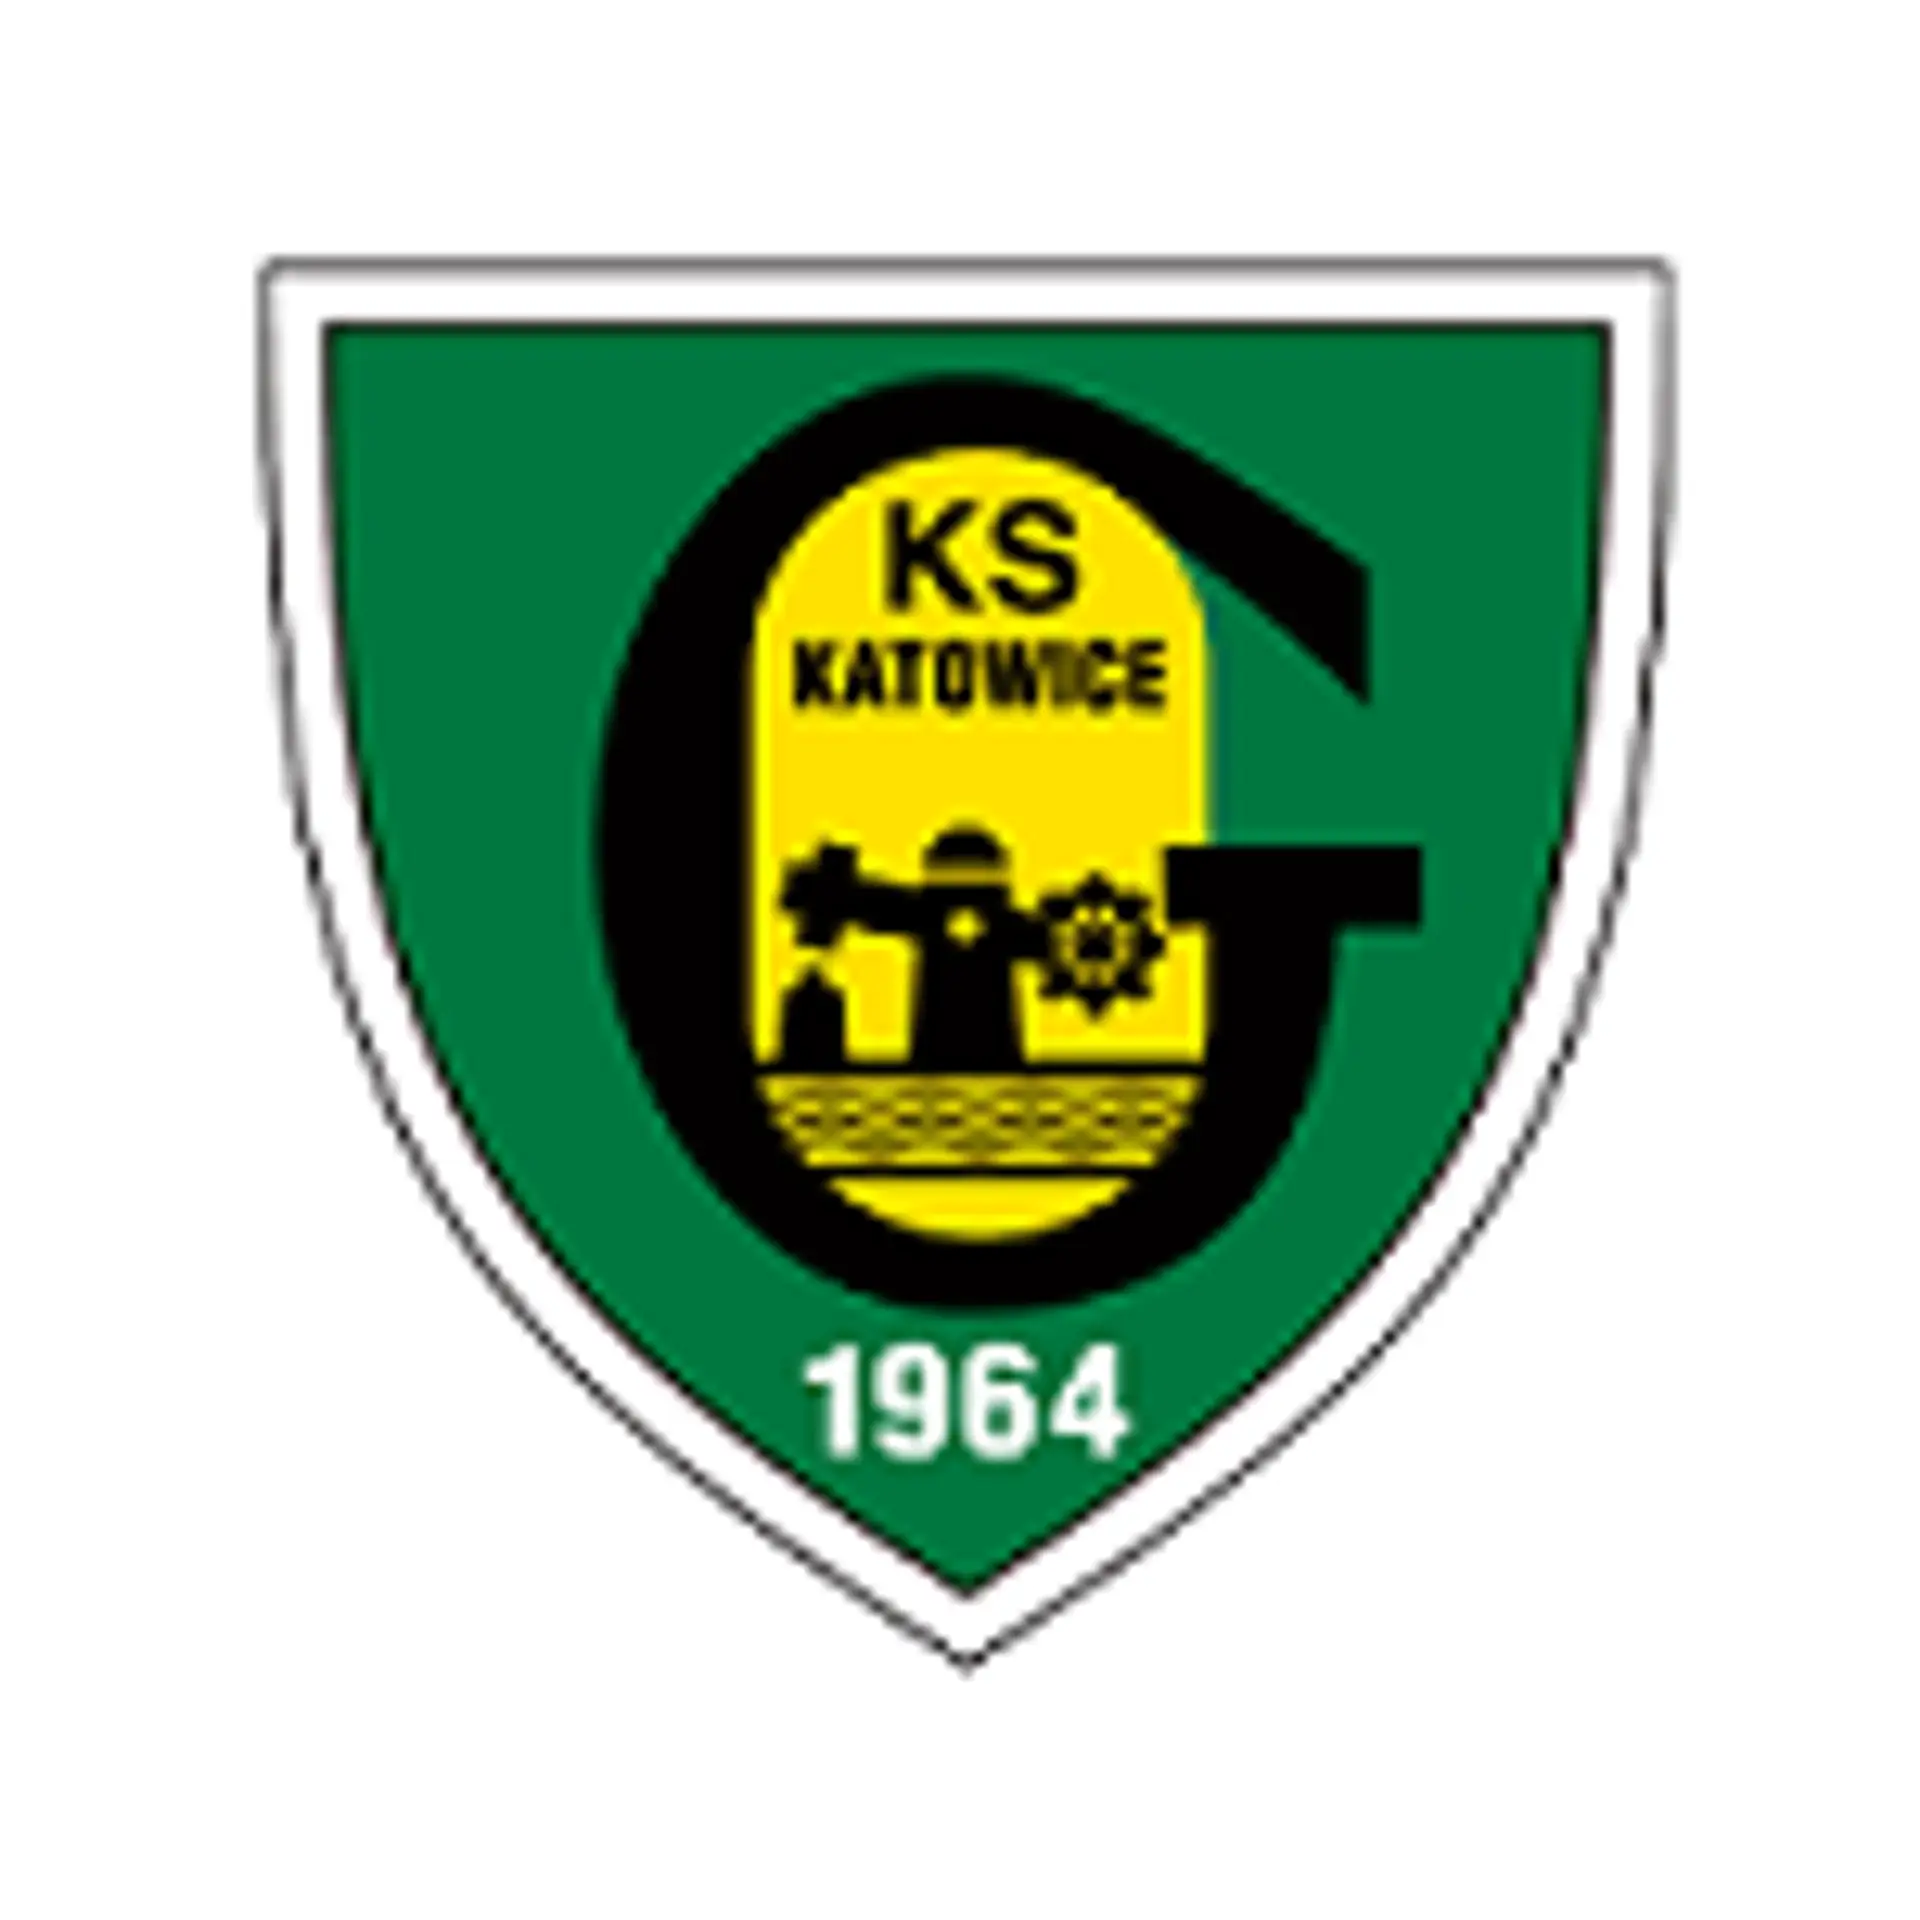 GKS Katowice Standings 